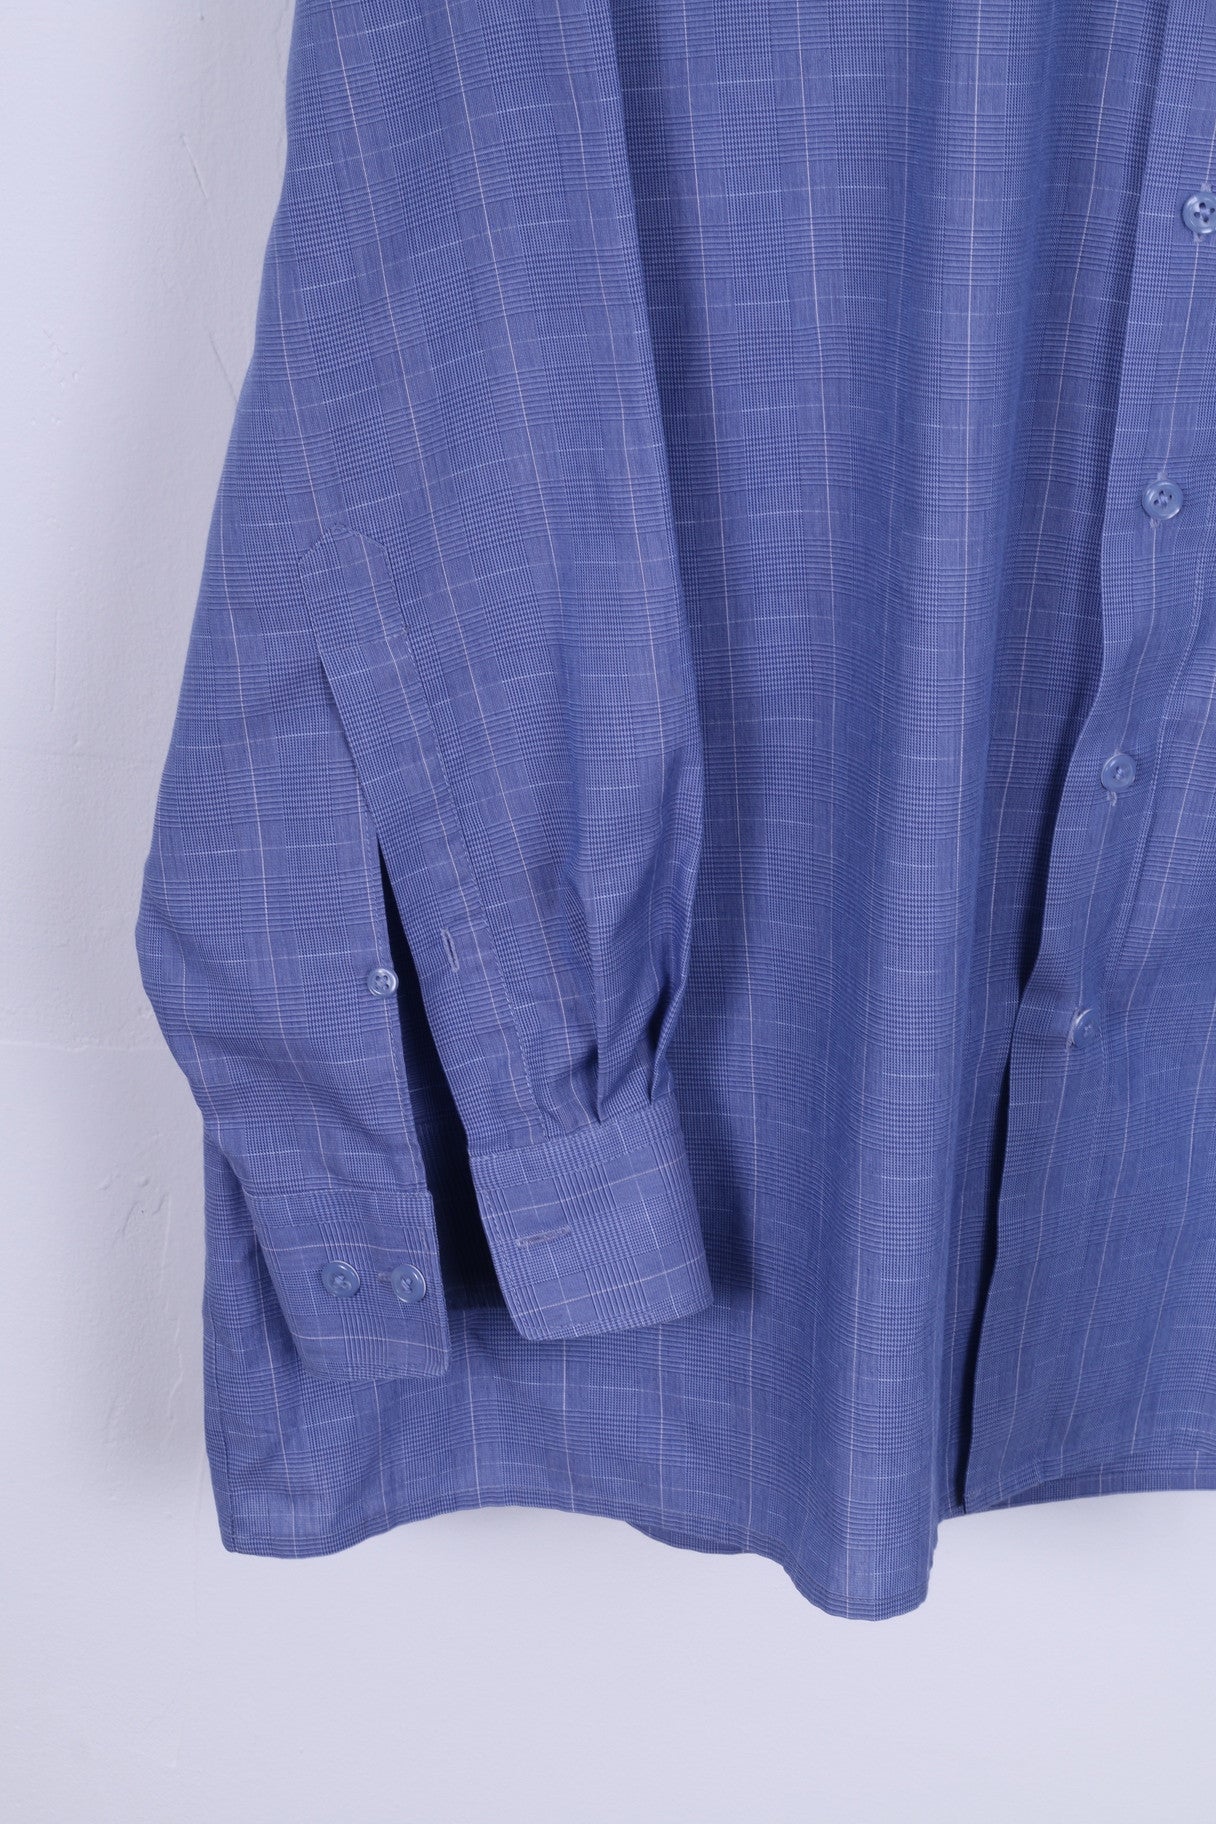 Royal Class Mens 45 XXL Casual Shirt Blue Classic Line Cotton Check Long Sleeve